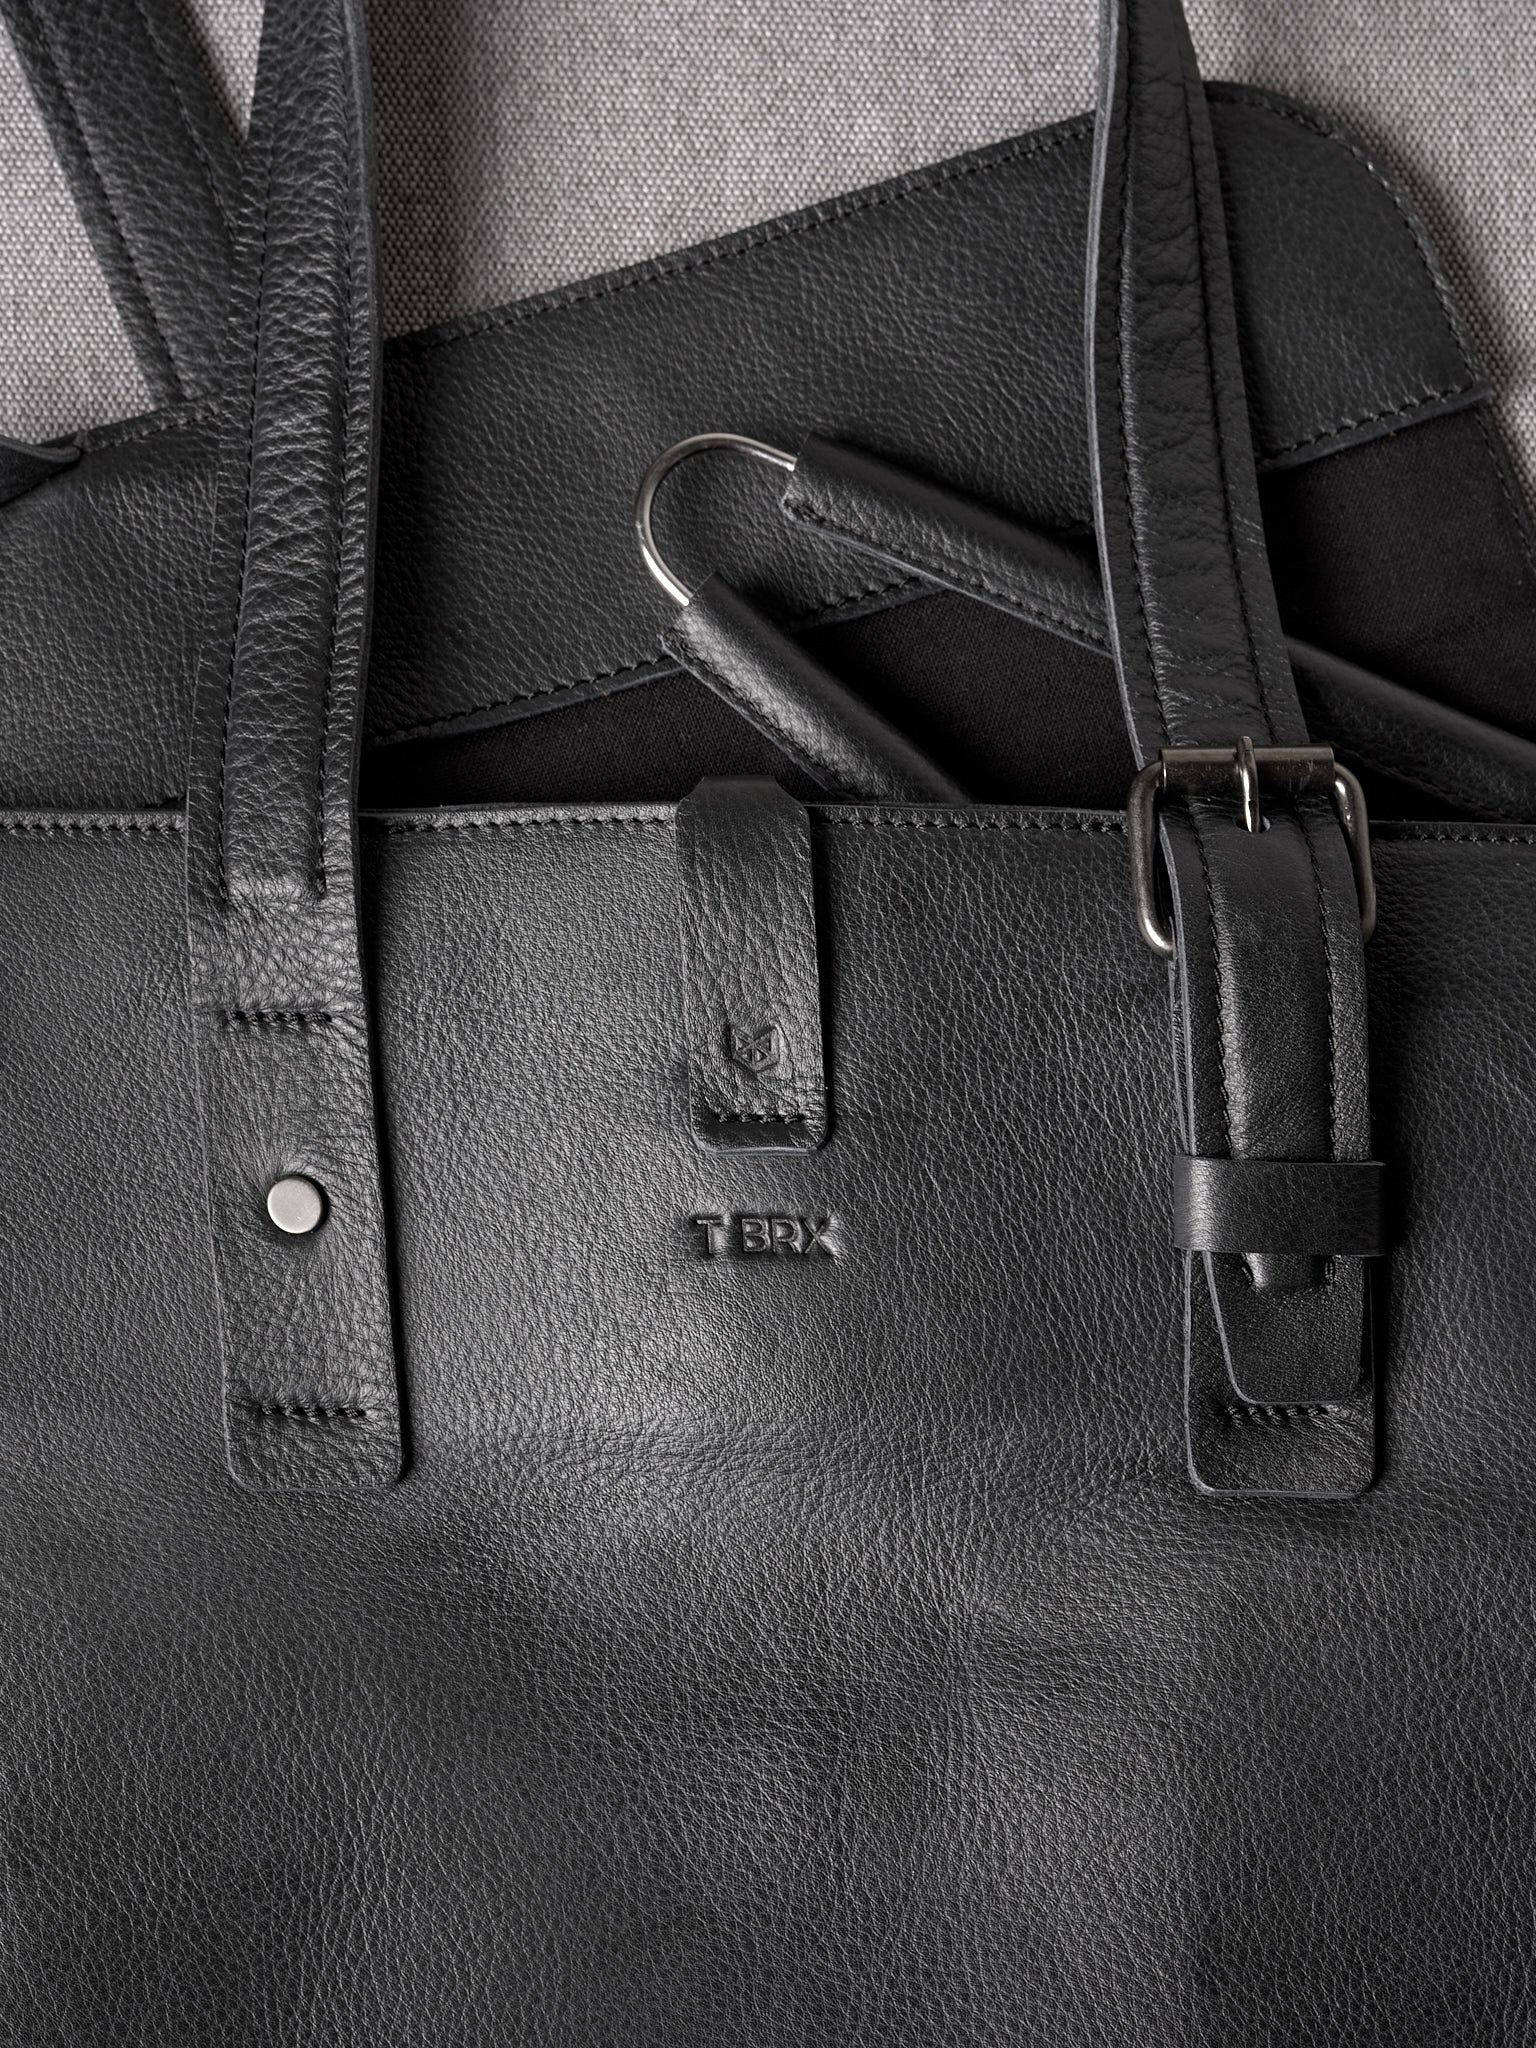 Custom Monogram. Traveling Garment Bag Black by Capra Leather